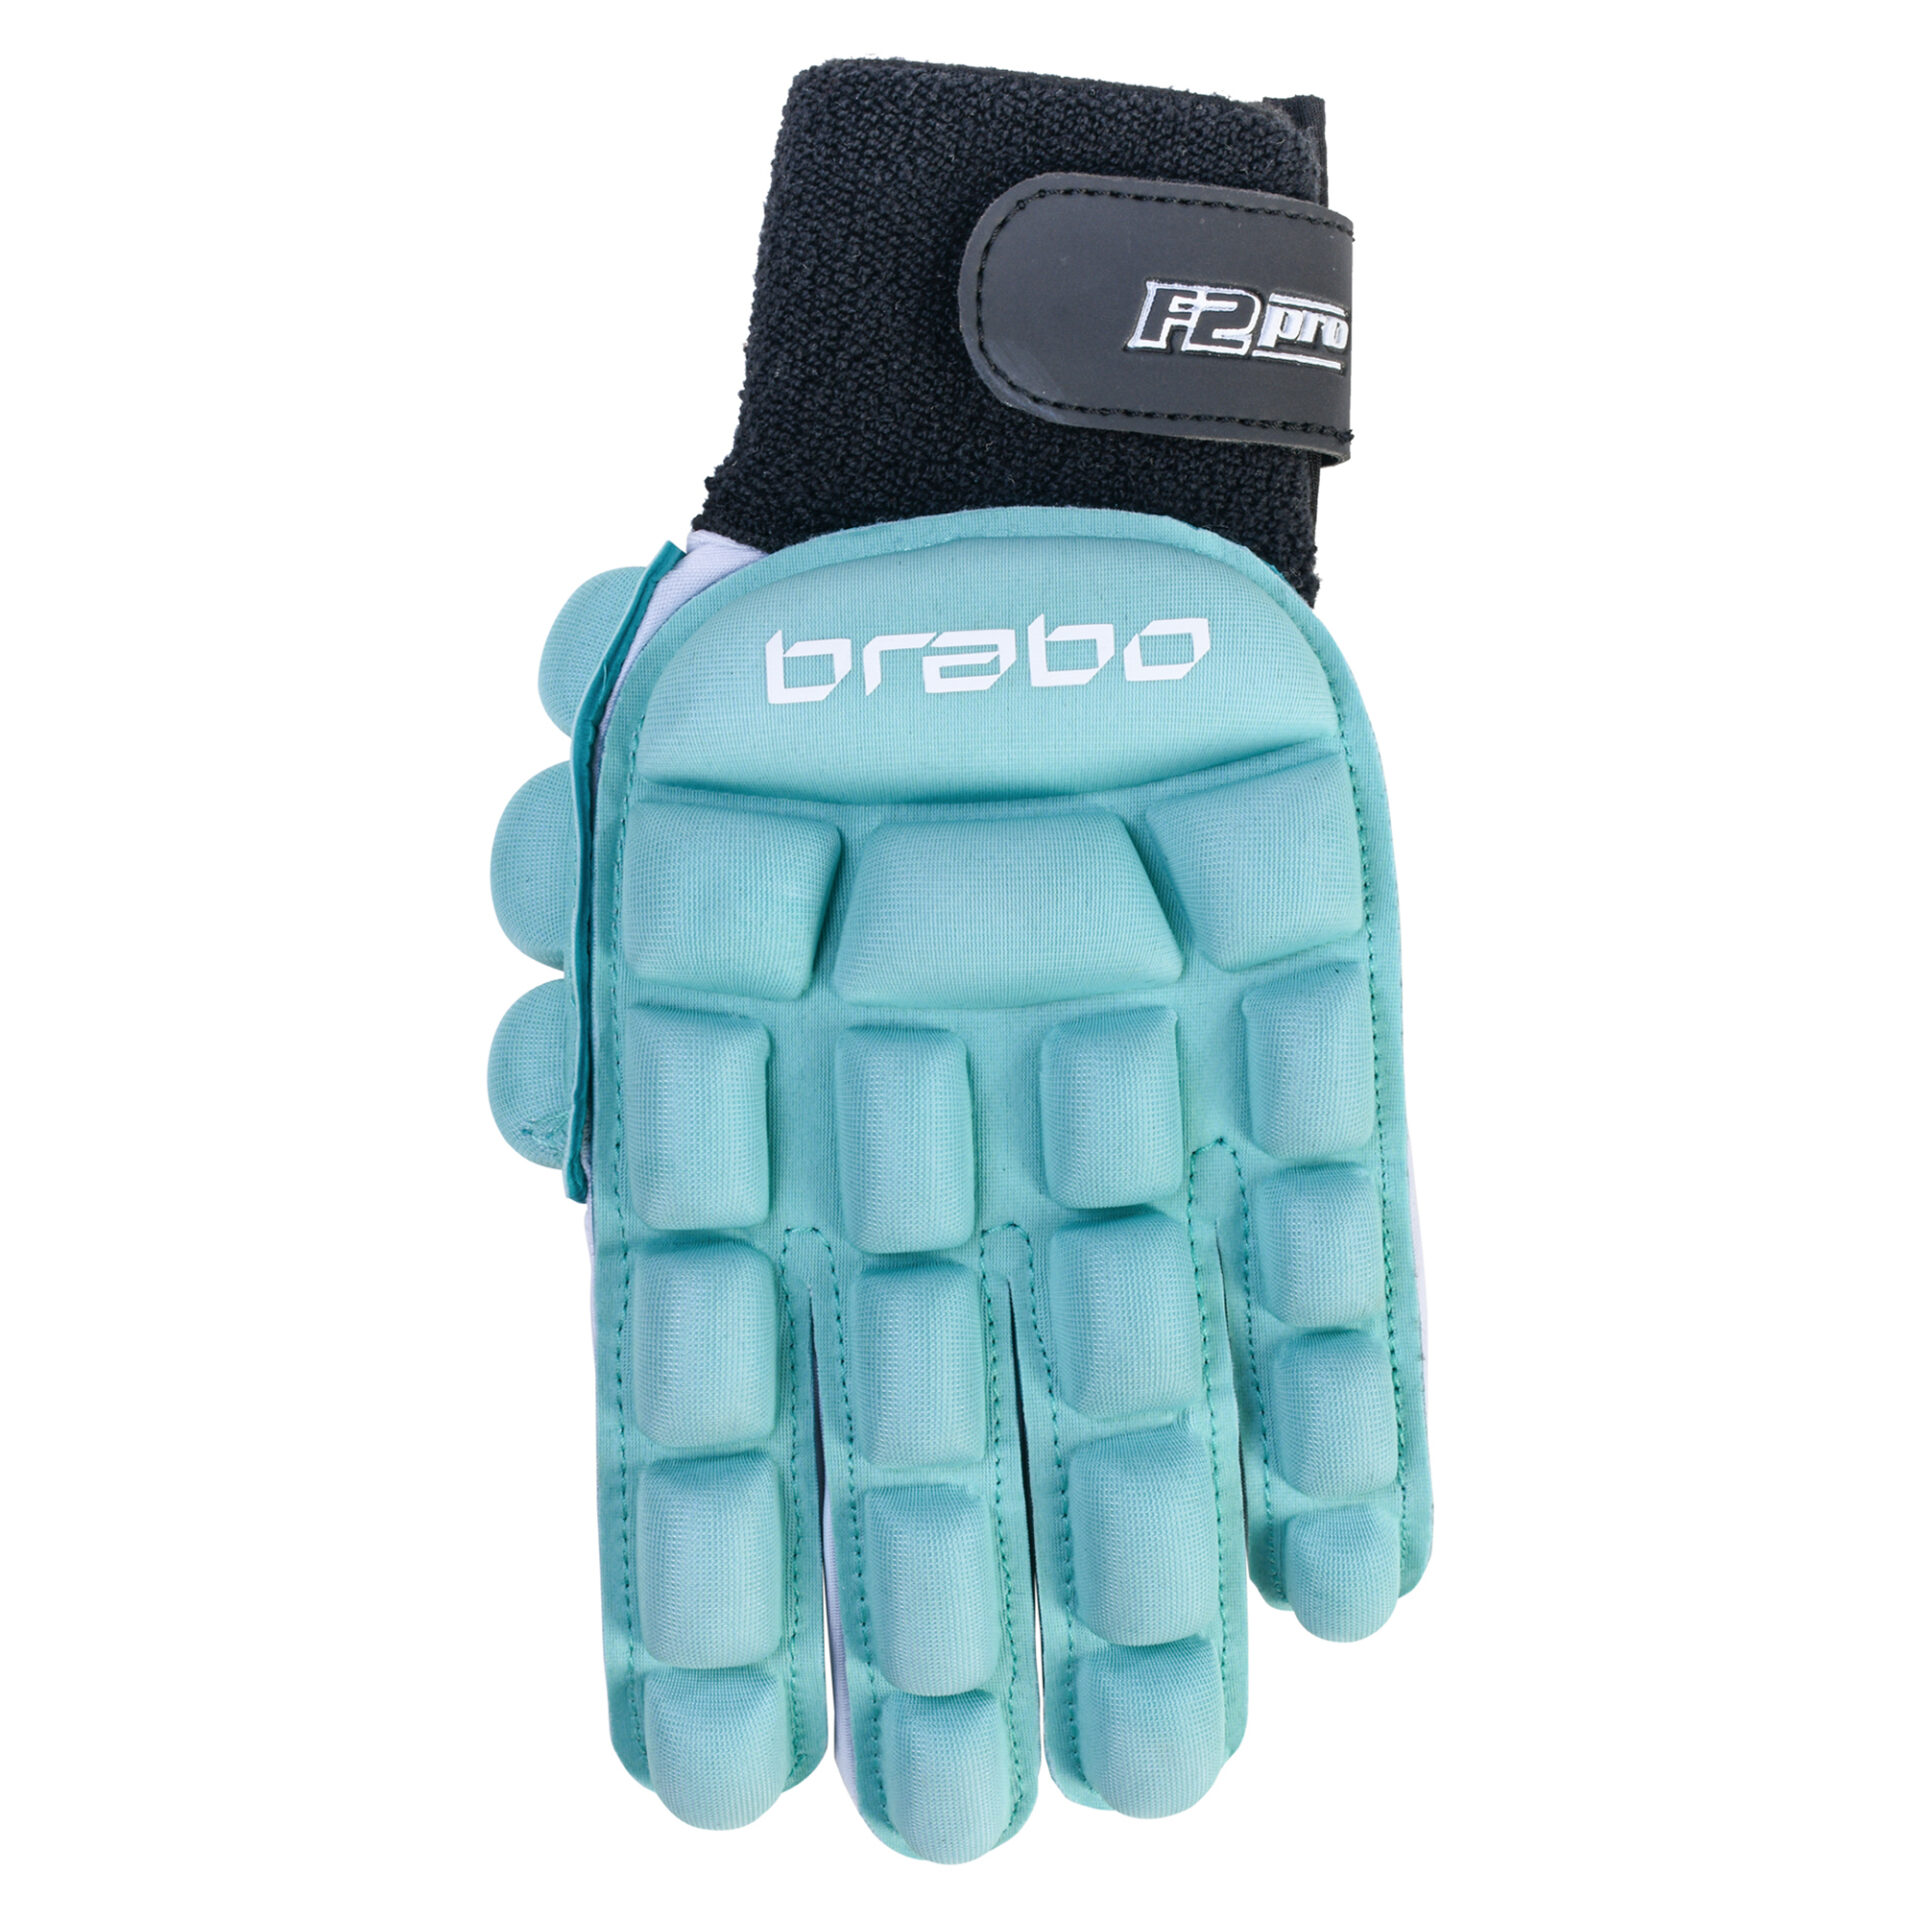 Glove F2.1 Pro Left Hand - Brabo